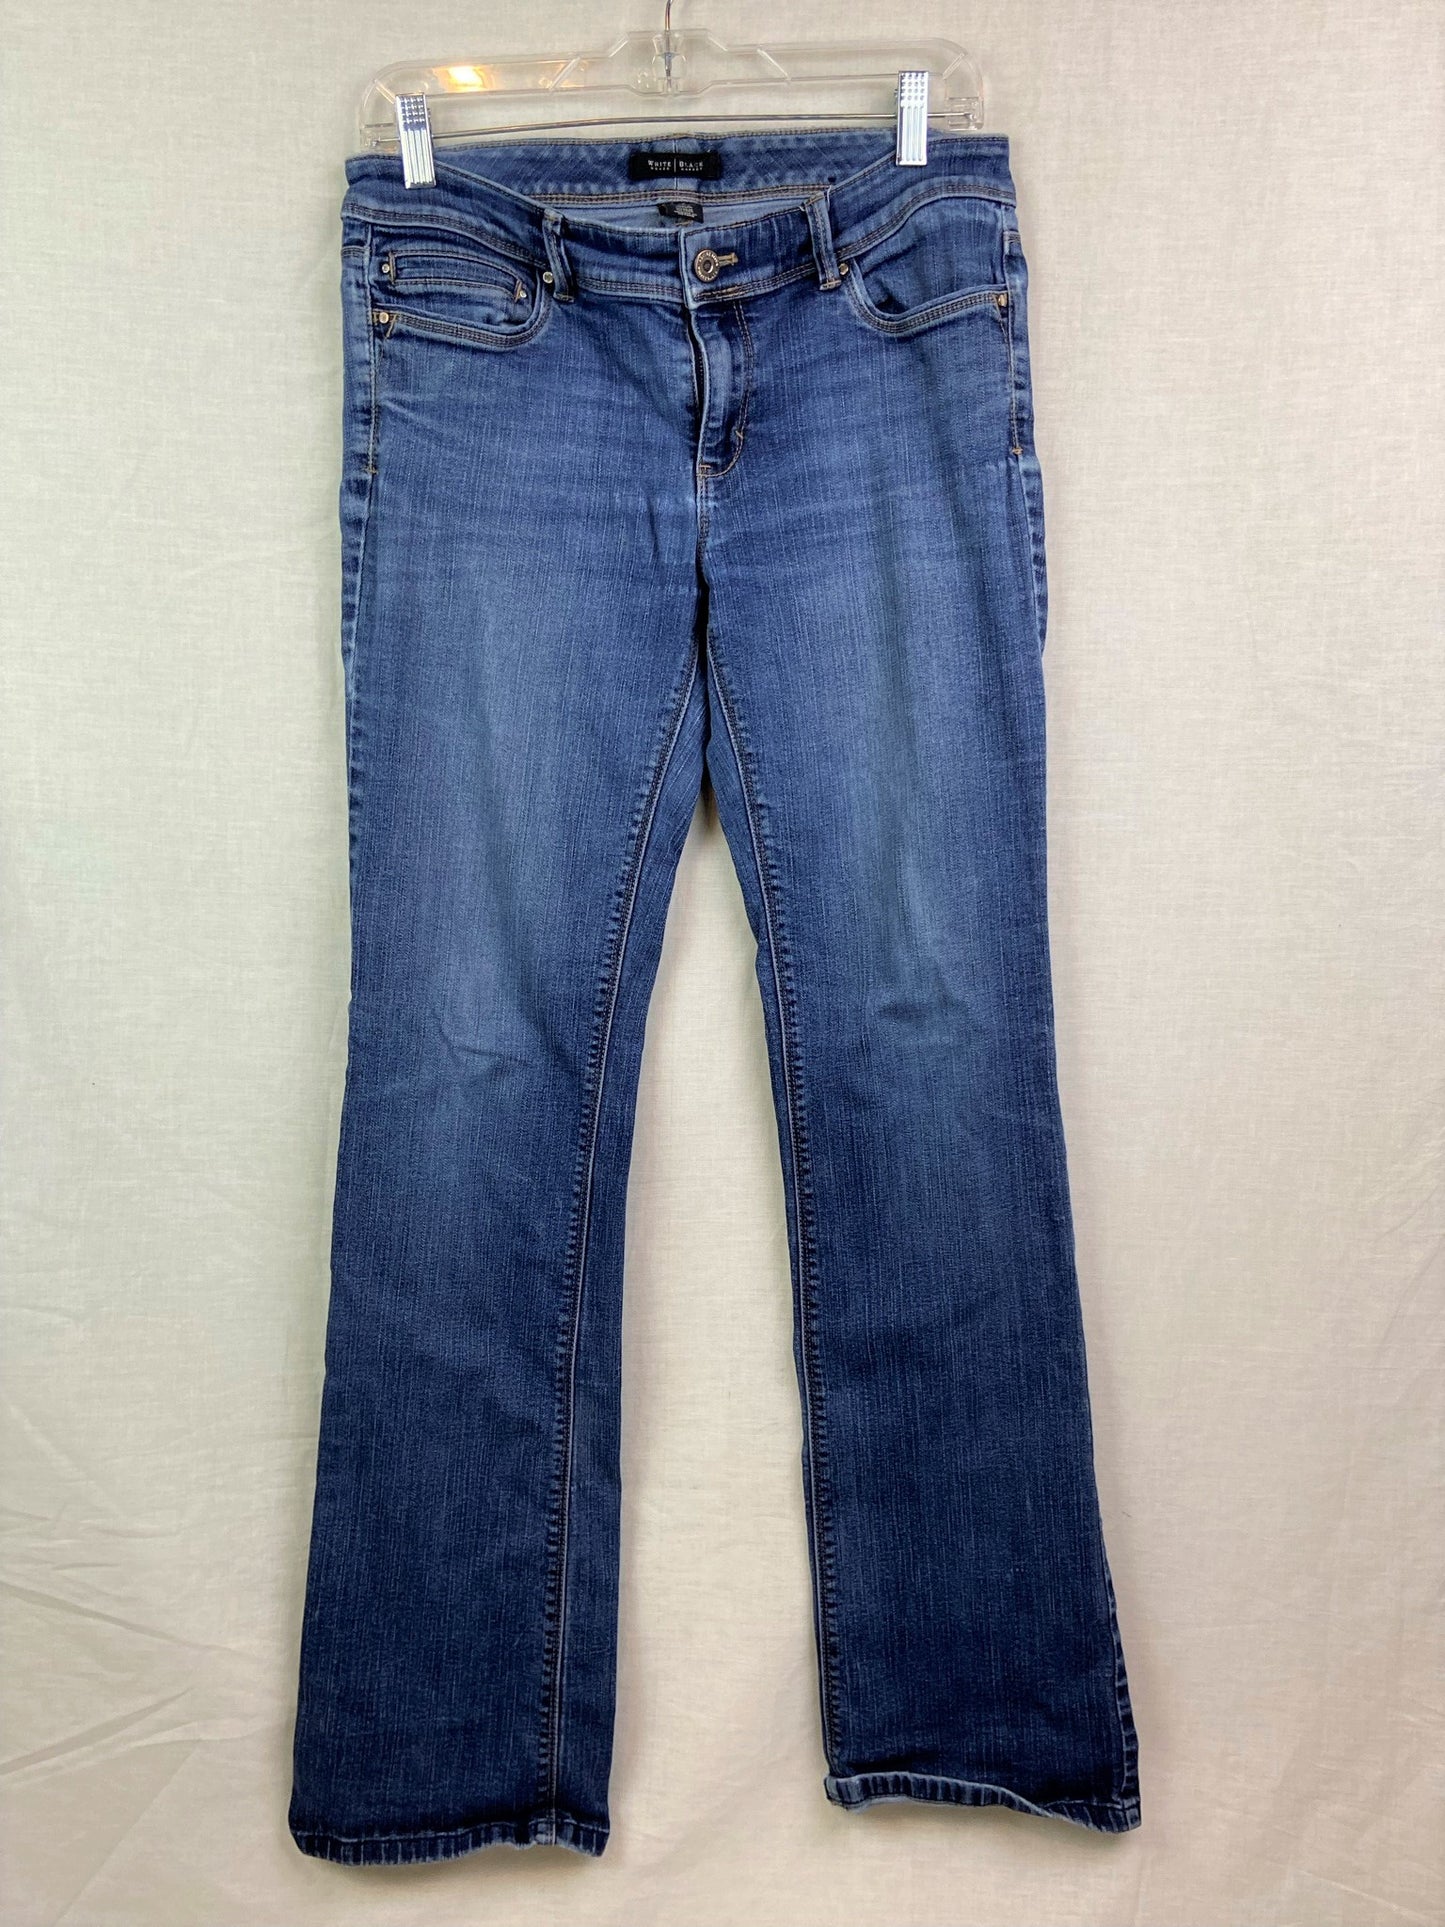 White House Black Market Distressed Faded Blue Denim Jeans